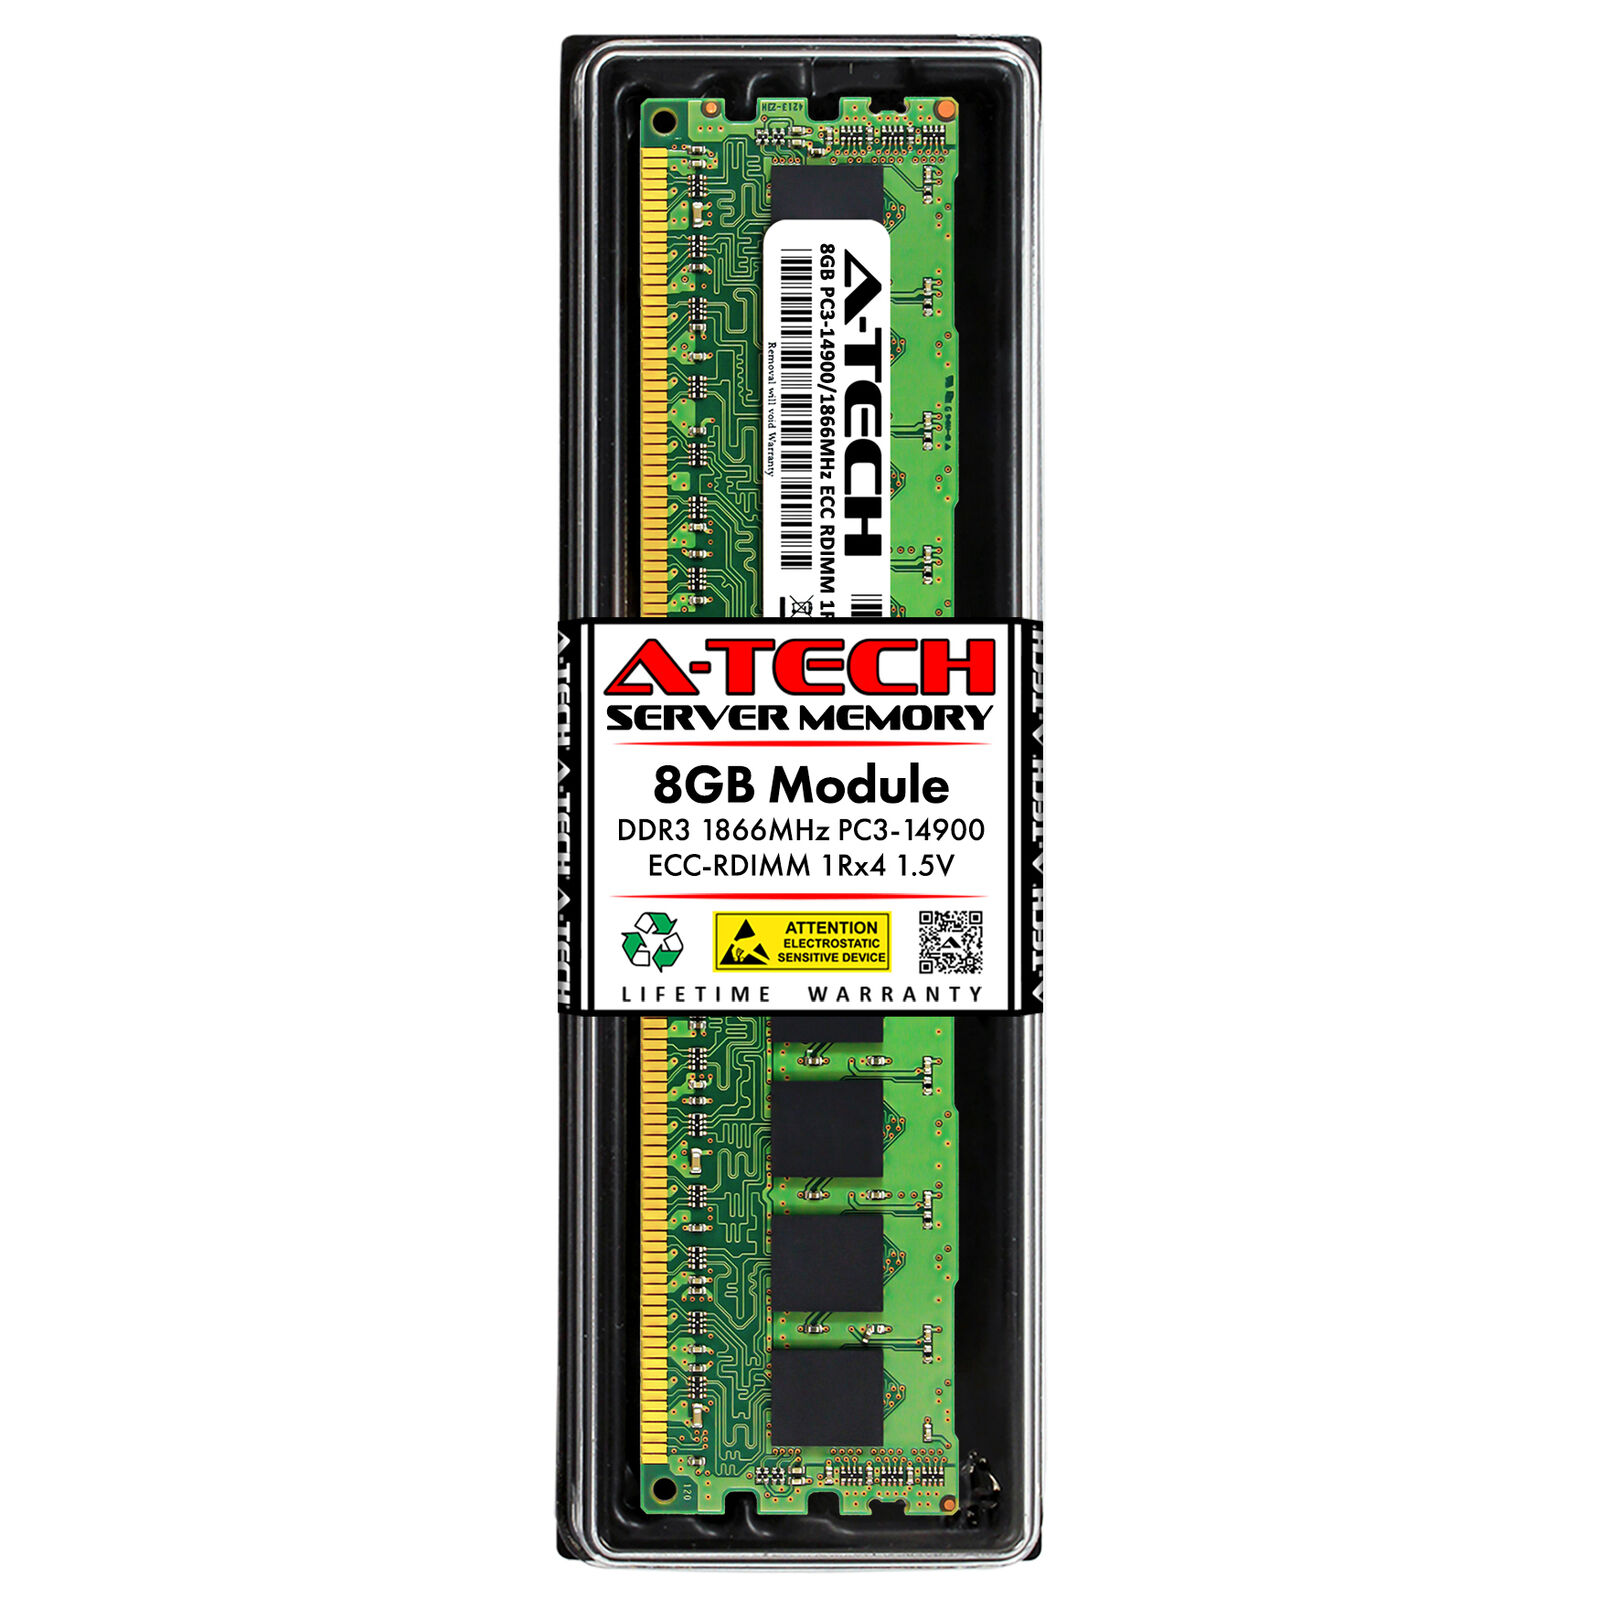 8GB DDR3 PC3-14900 RDIMM (Hynix HMT41GR7BFR4C-RD Equivalent) Server Memory RAM